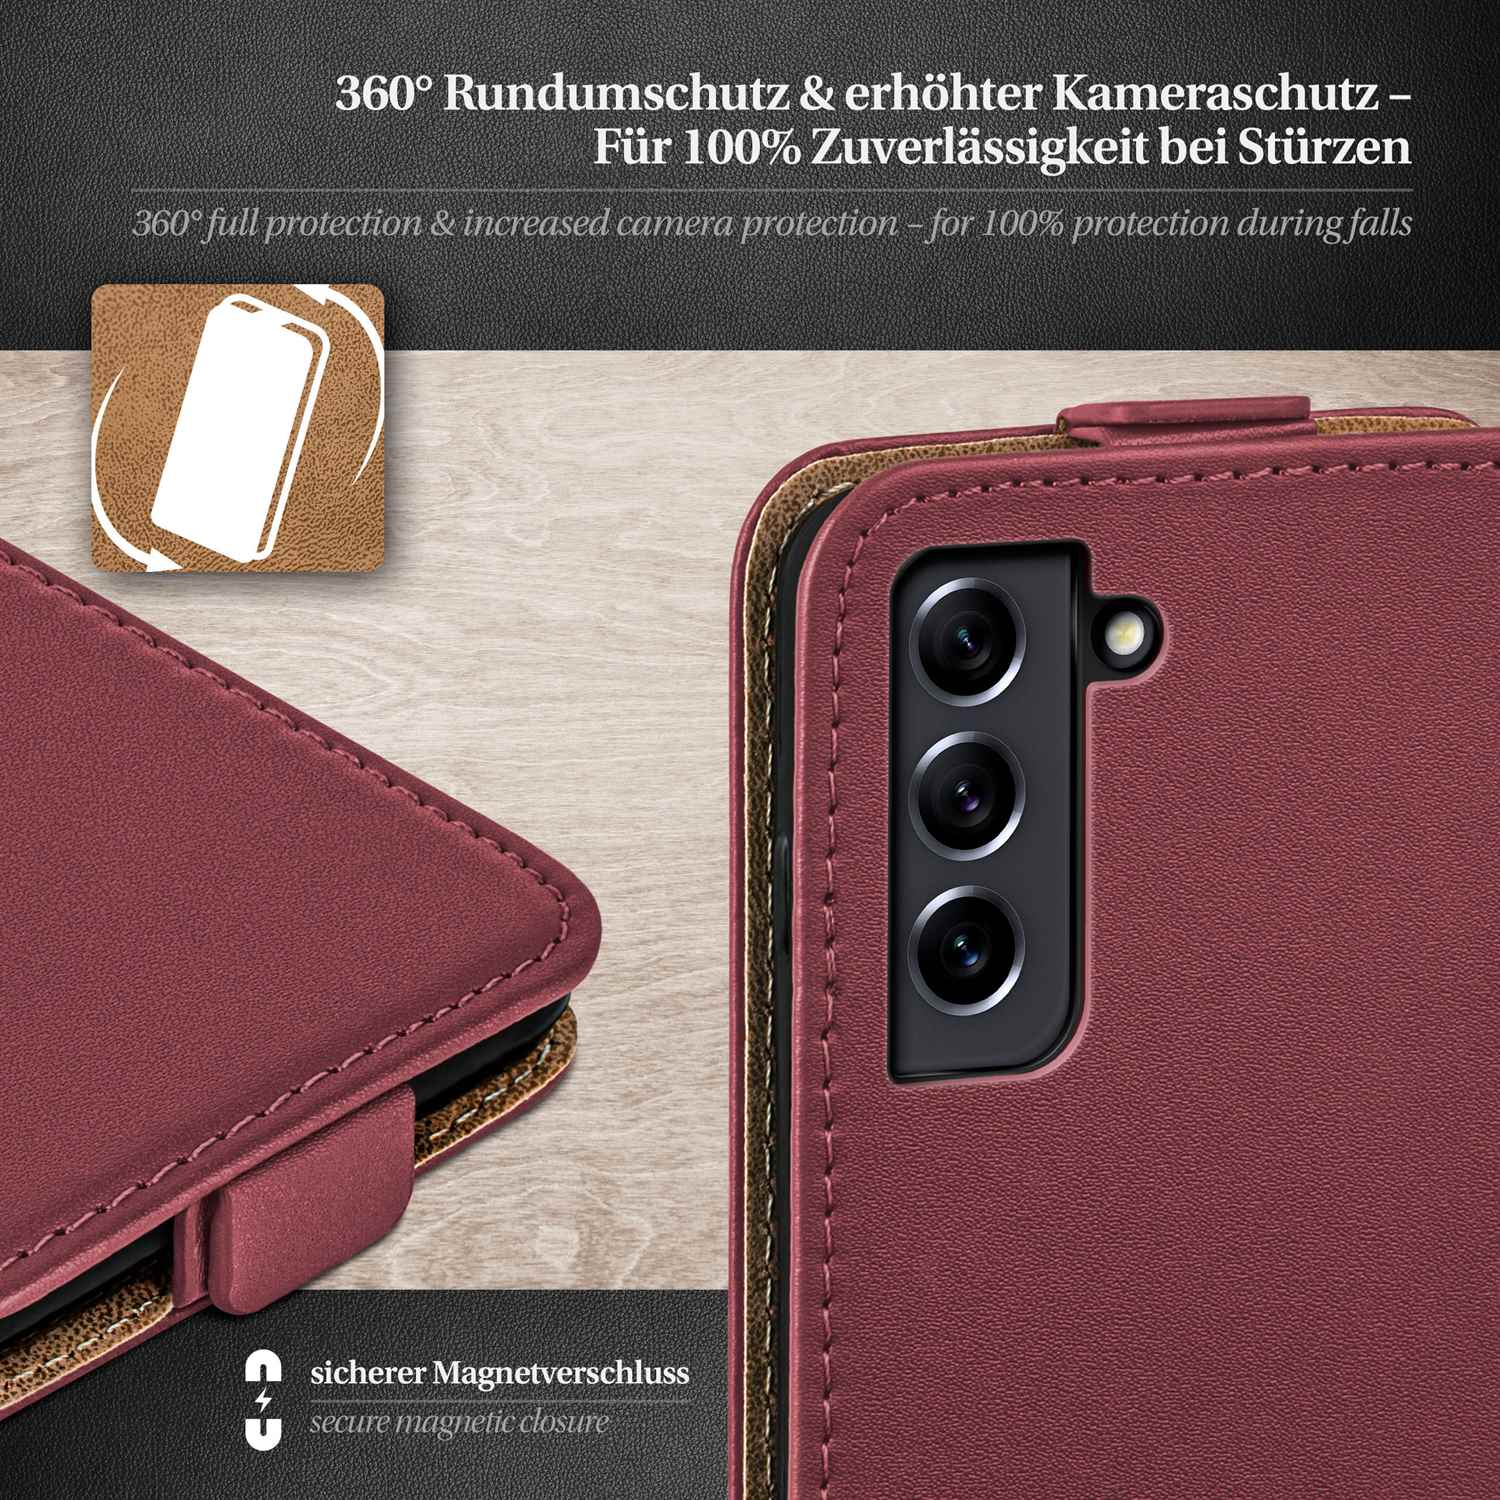 MOEX 5G, FE S21 Maroon-Red Cover, Flip Flip Case, Samsung, Galaxy